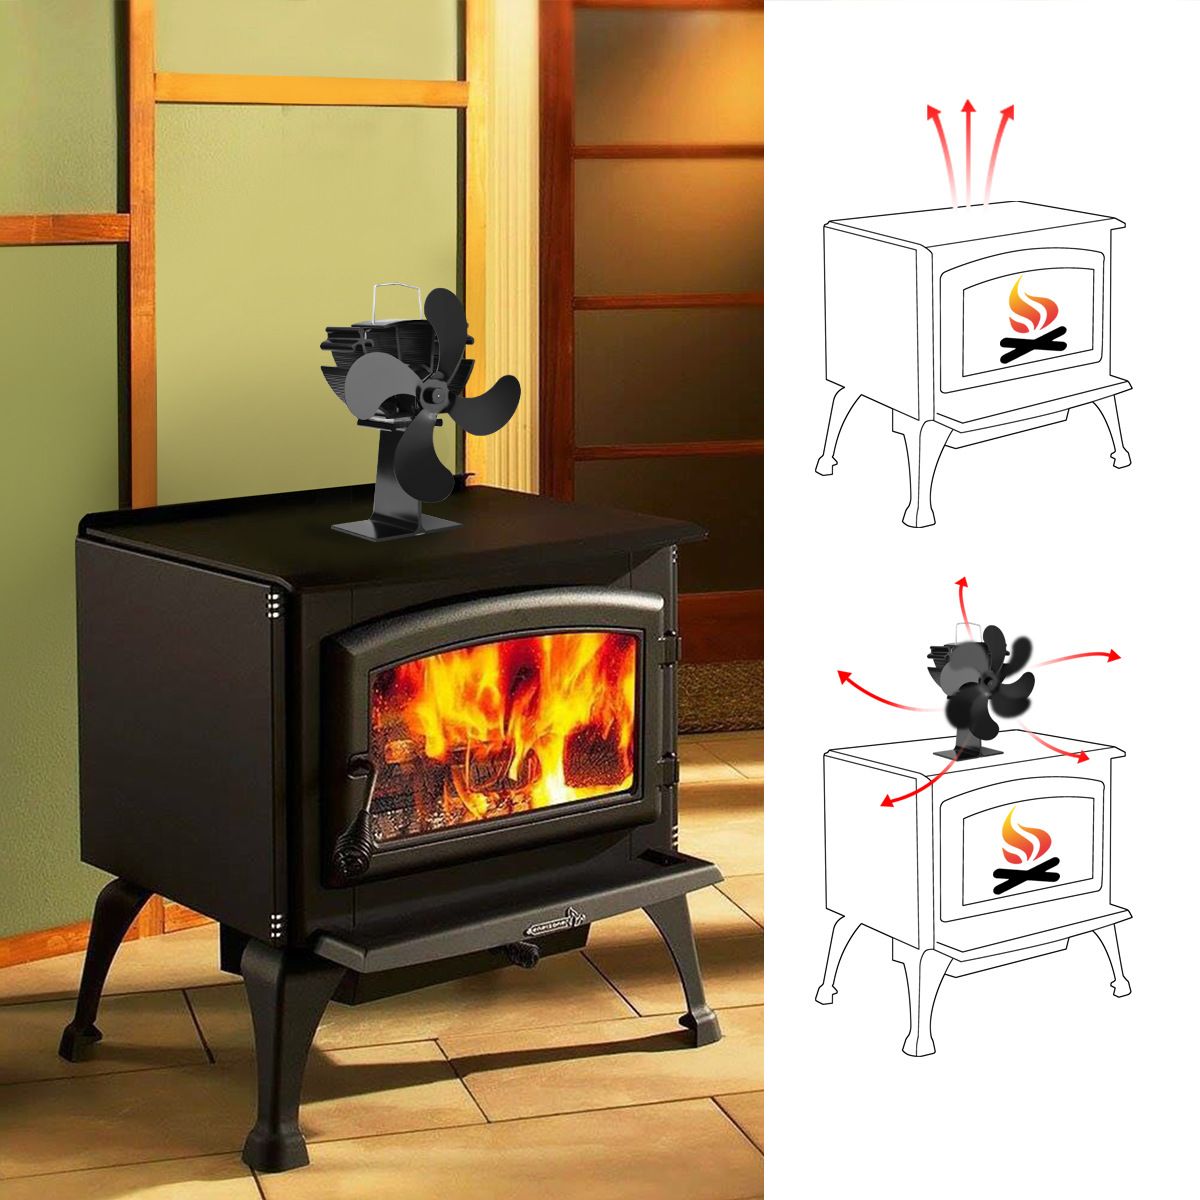 Small-4-Blade-Heat-Powered-Wood-Log-Burning-Stove-Fan-Eco-Heating-Fan-1392089